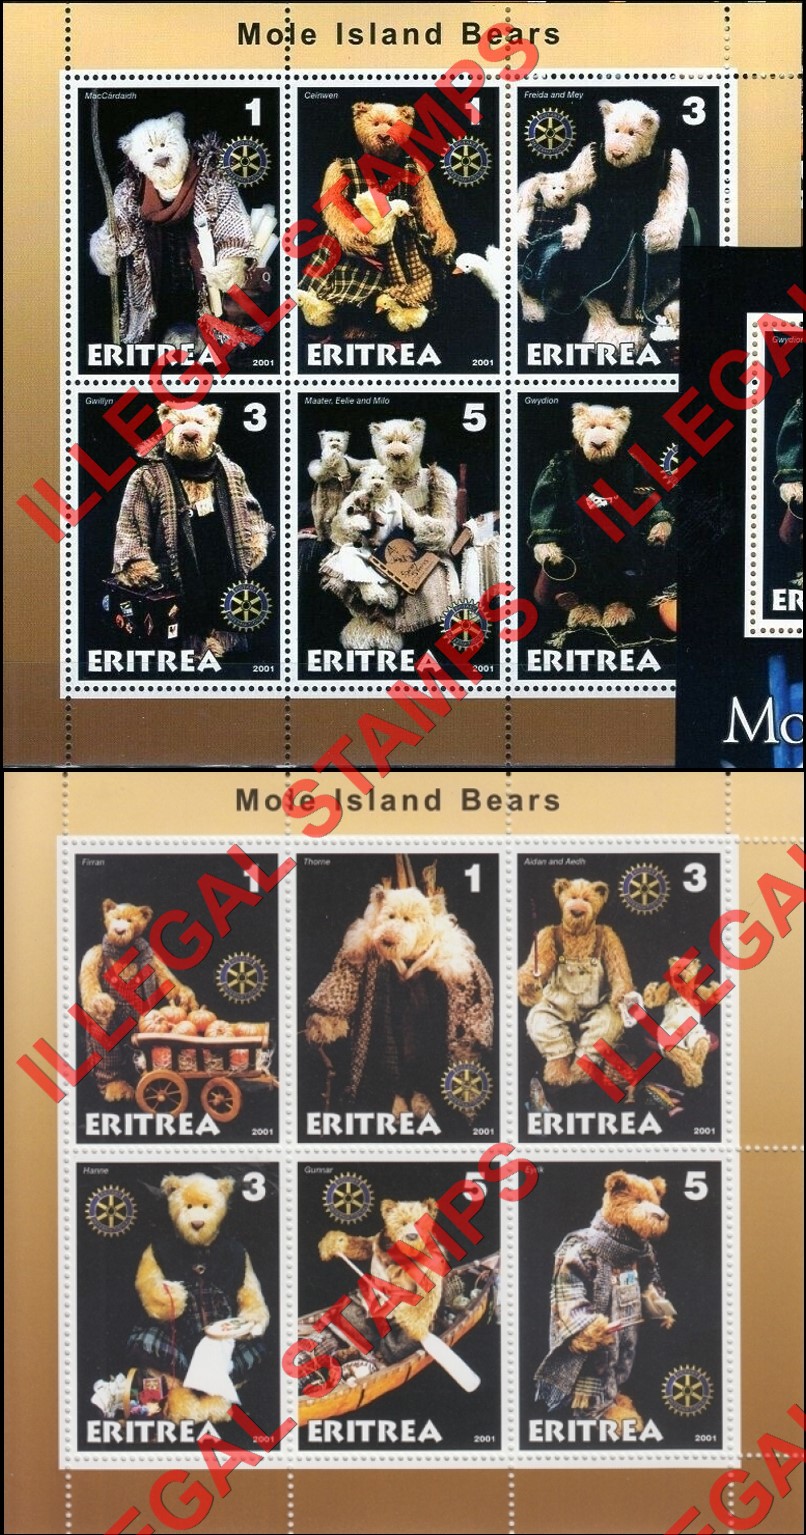 Eritrea 2001 Mole Island Teddy Bears Counterfeit Illegal Stamp Souvenir Sheets of 6